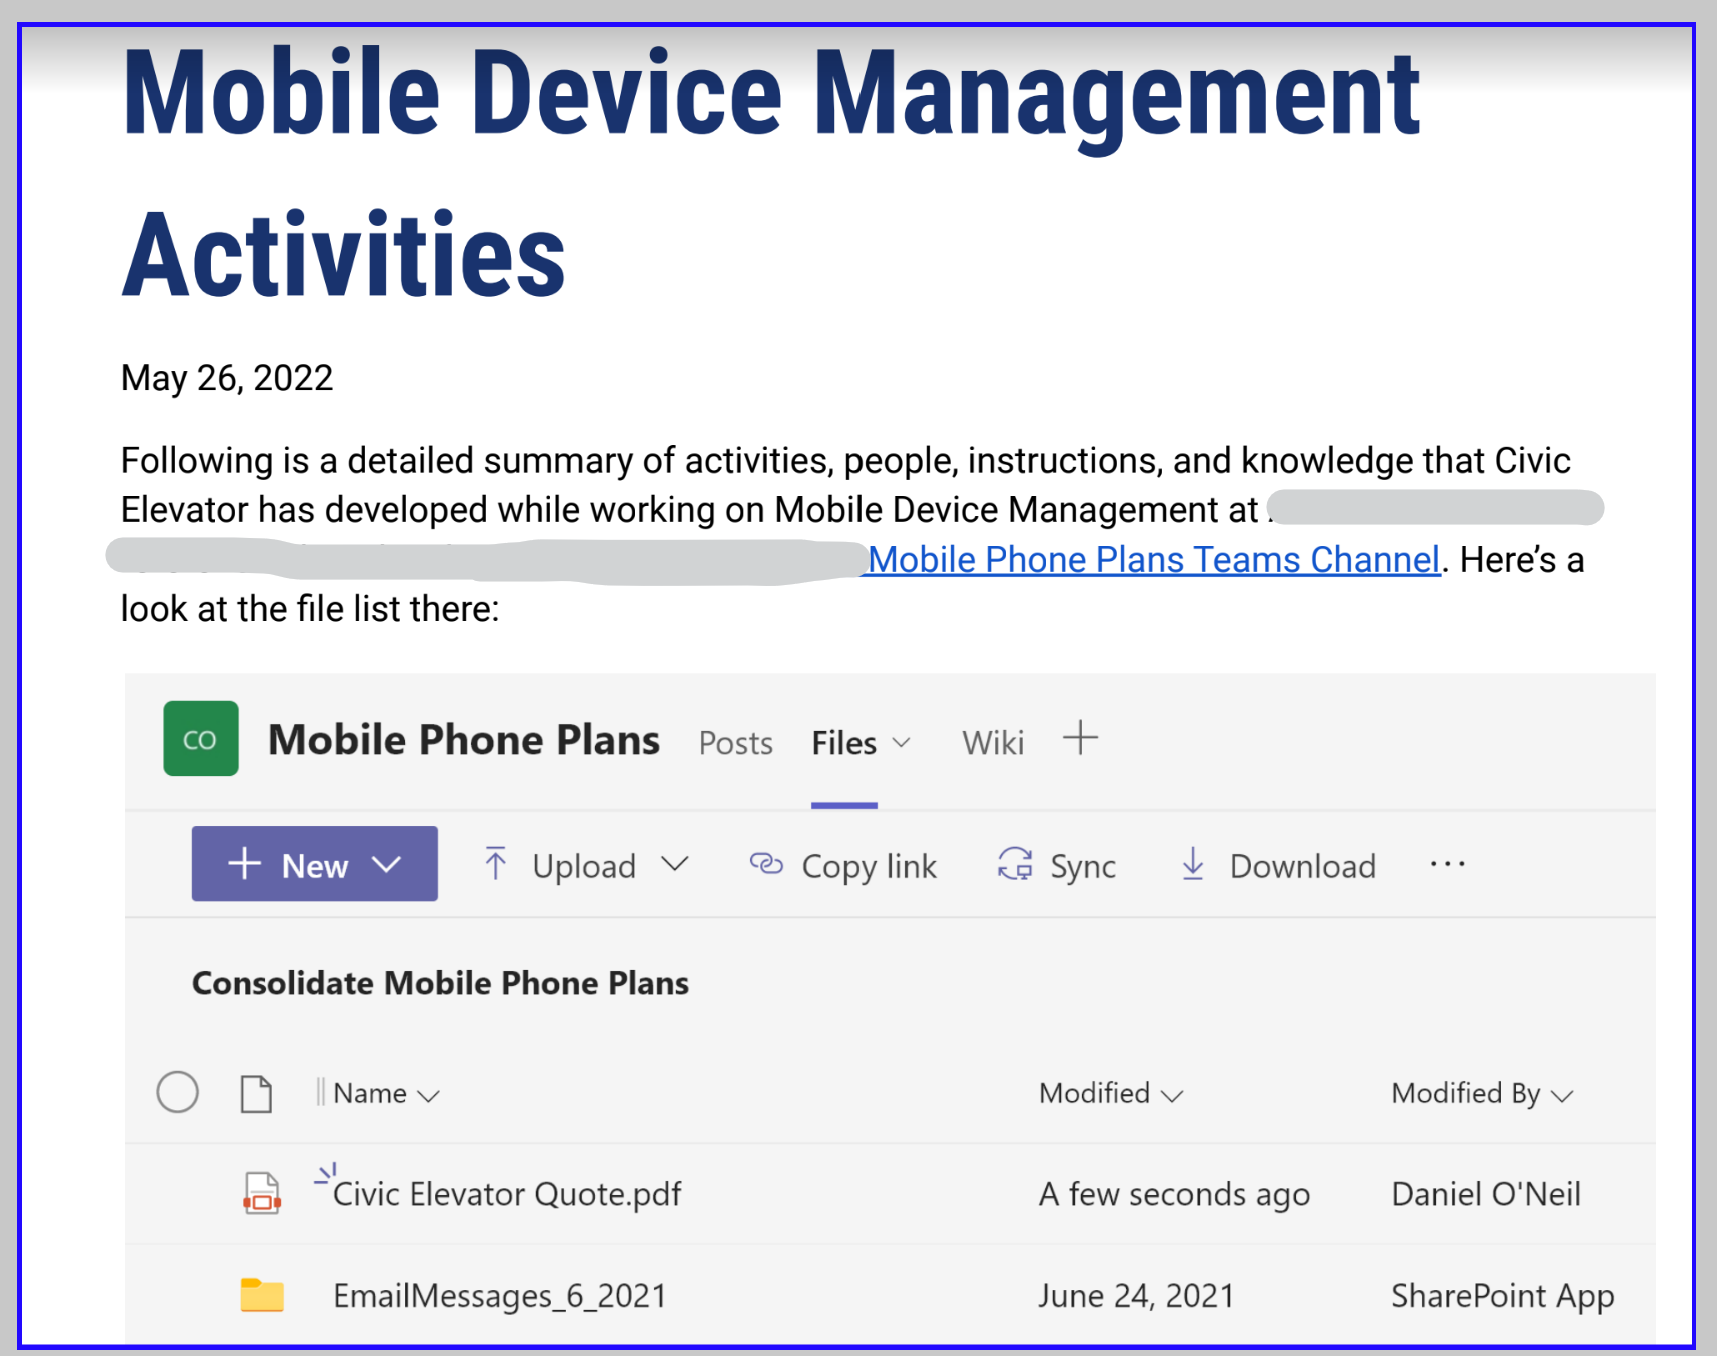 Mobile Device Management at a Large Enterprise